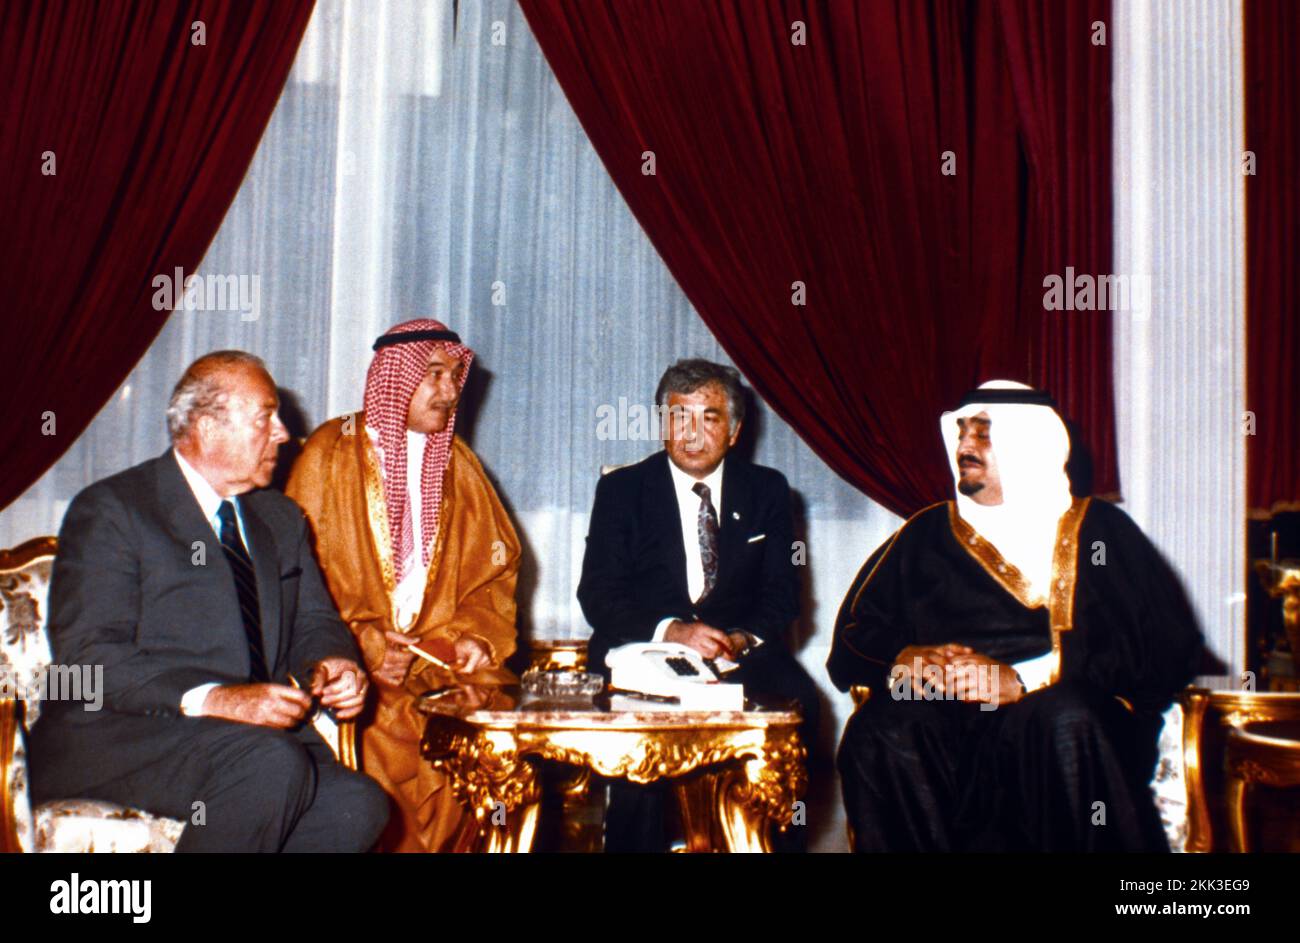 Saudi Arabia King Fahd Receiving George Shultz the U.S Secretary of State In 1987 Stock Photo